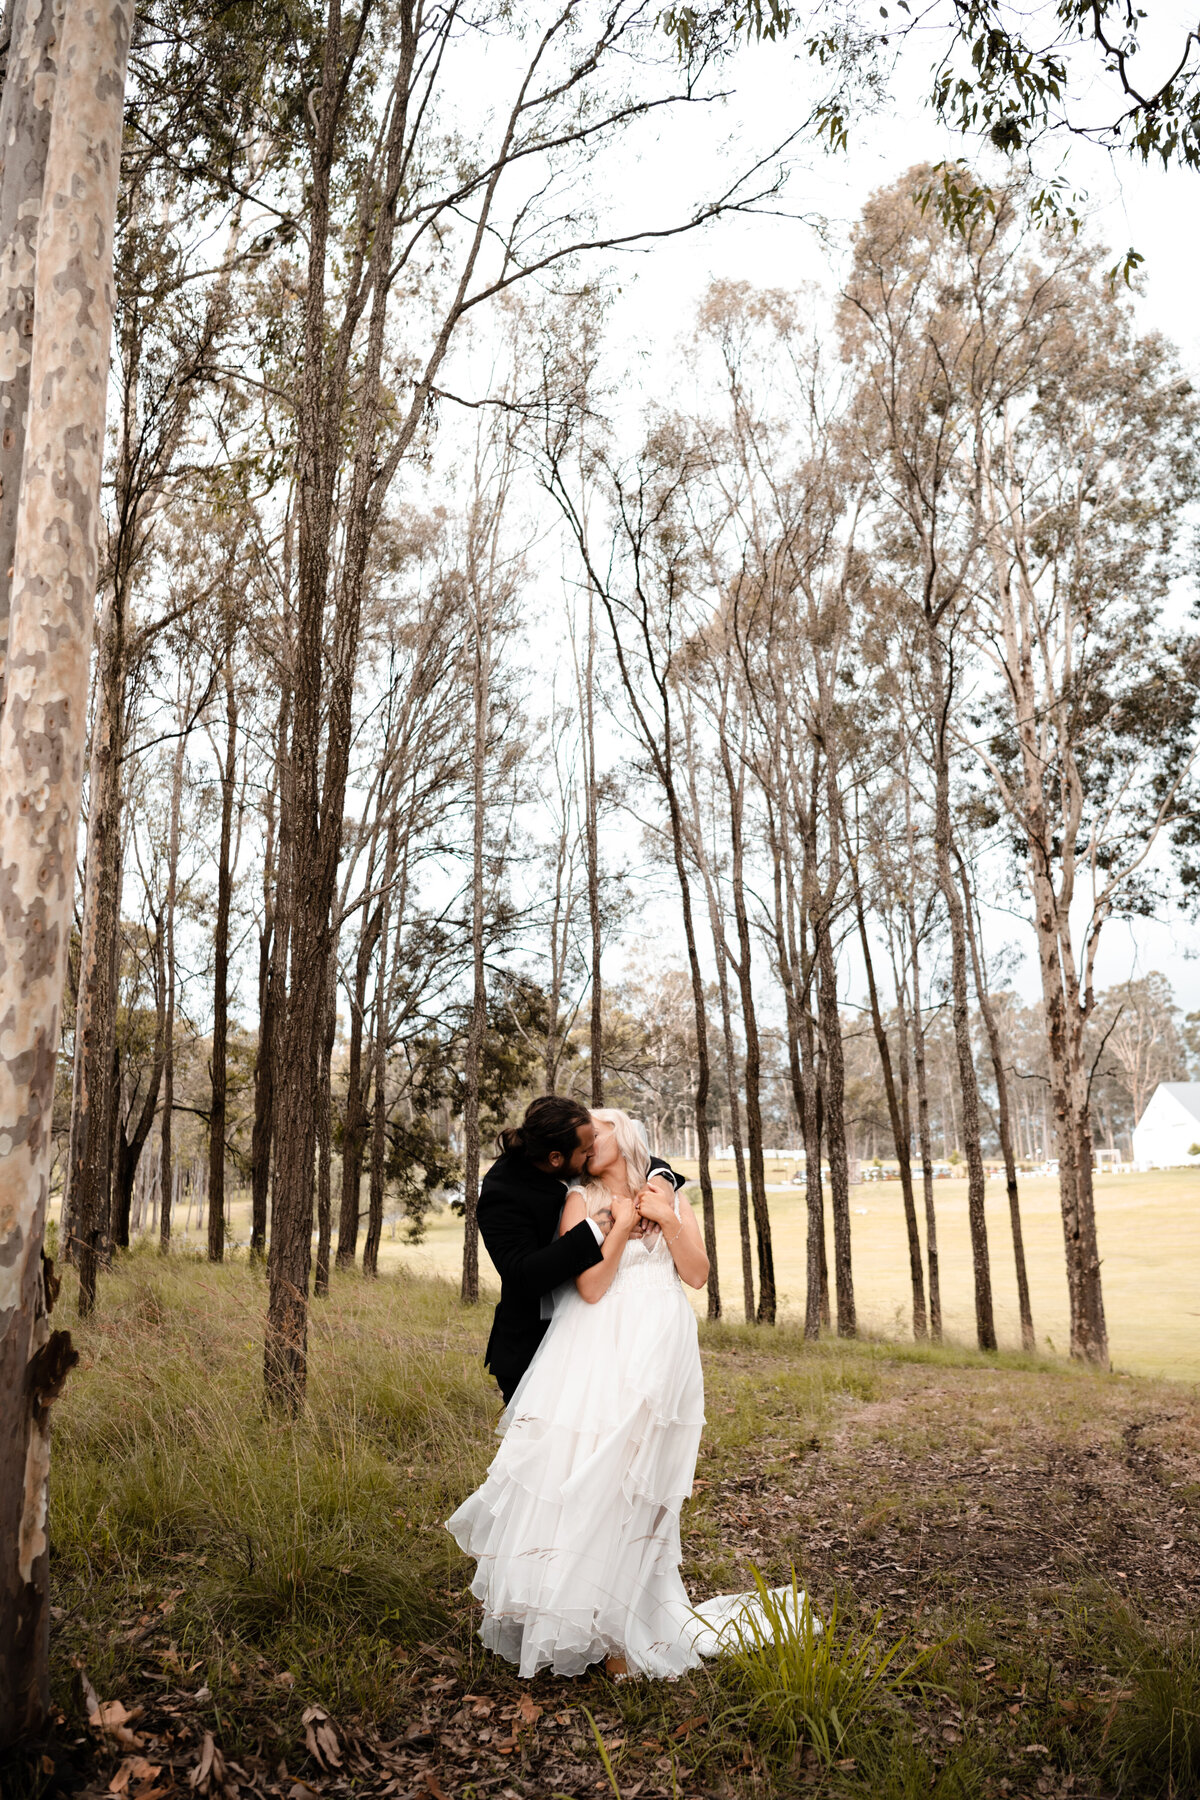 Abigail_Steven_Wedding_Images_Roam Ahead Weddings - 605